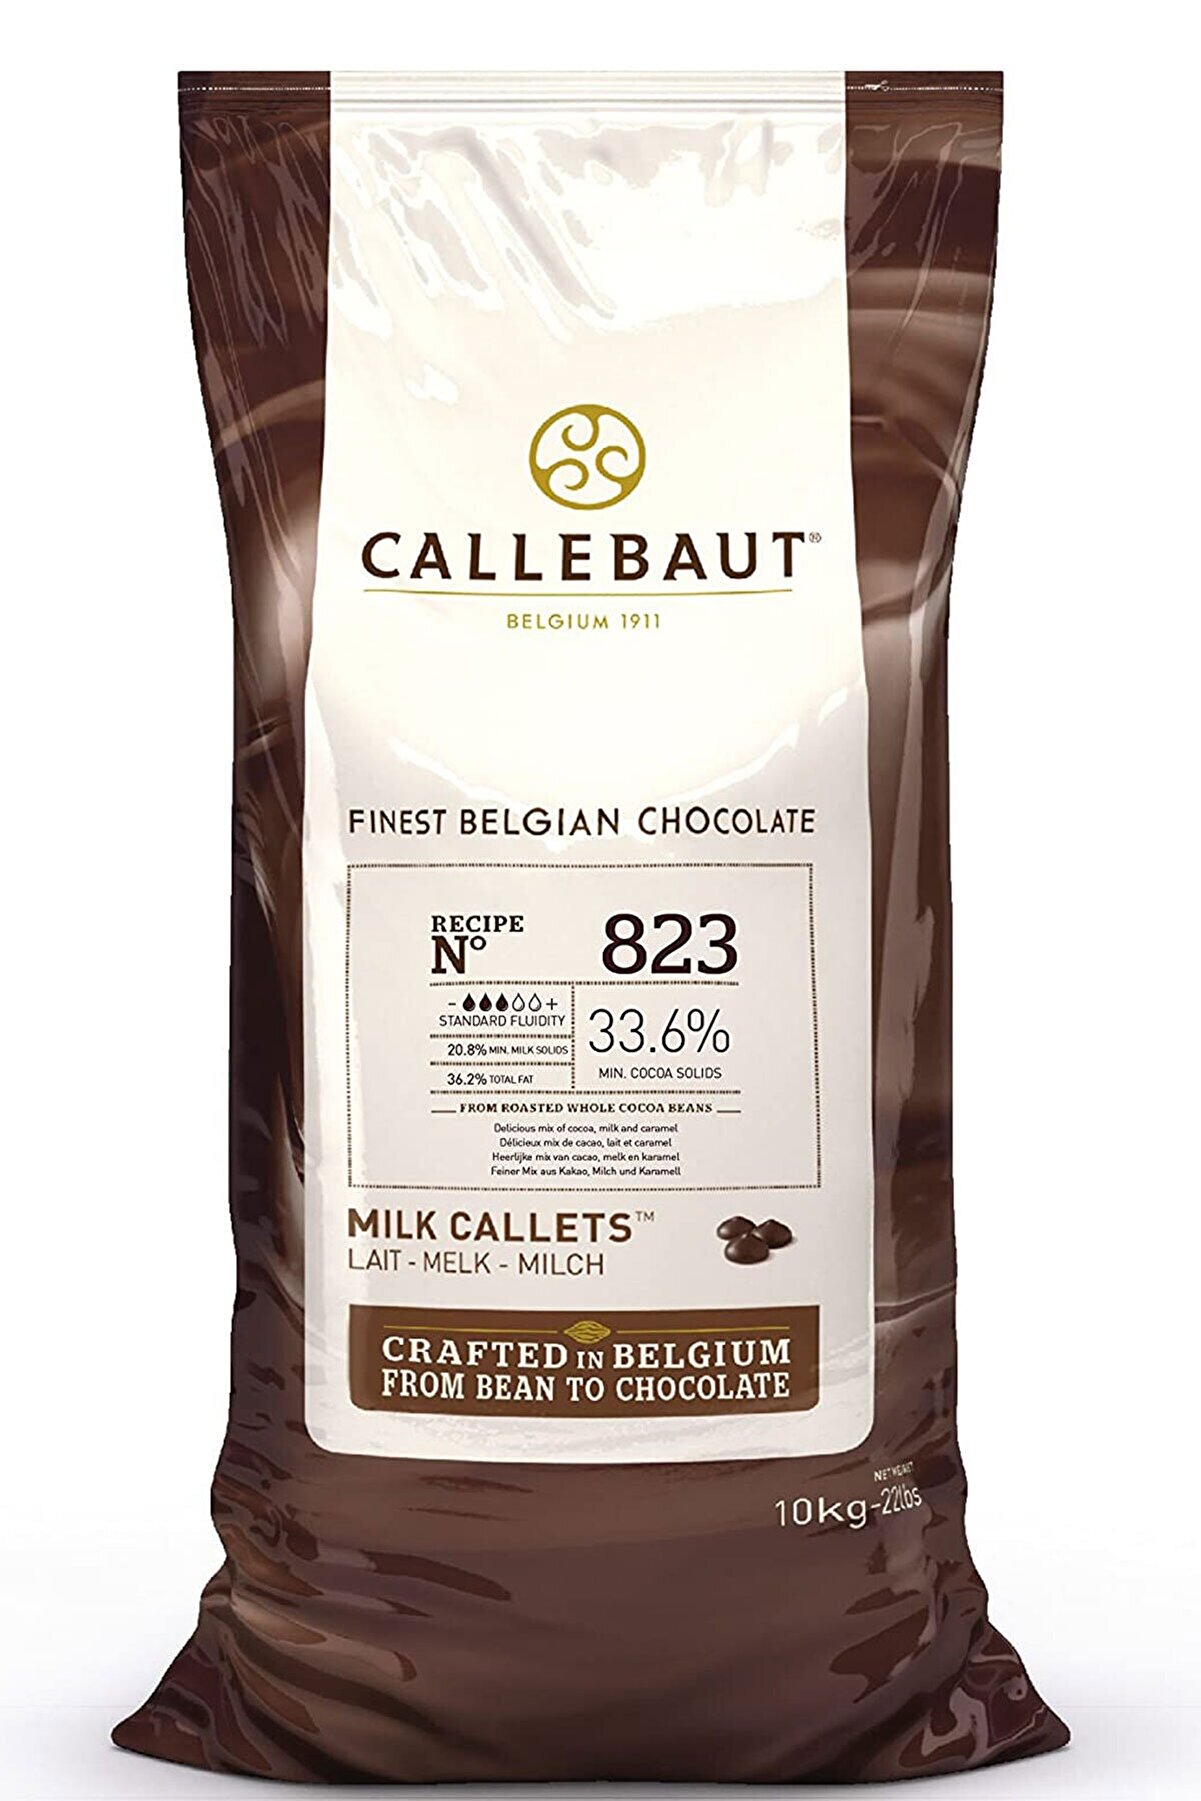 Çikolata ÖZEL Callebaut Sütlü Çikolata 10 Kg Kuvertur Damla 823nv-595